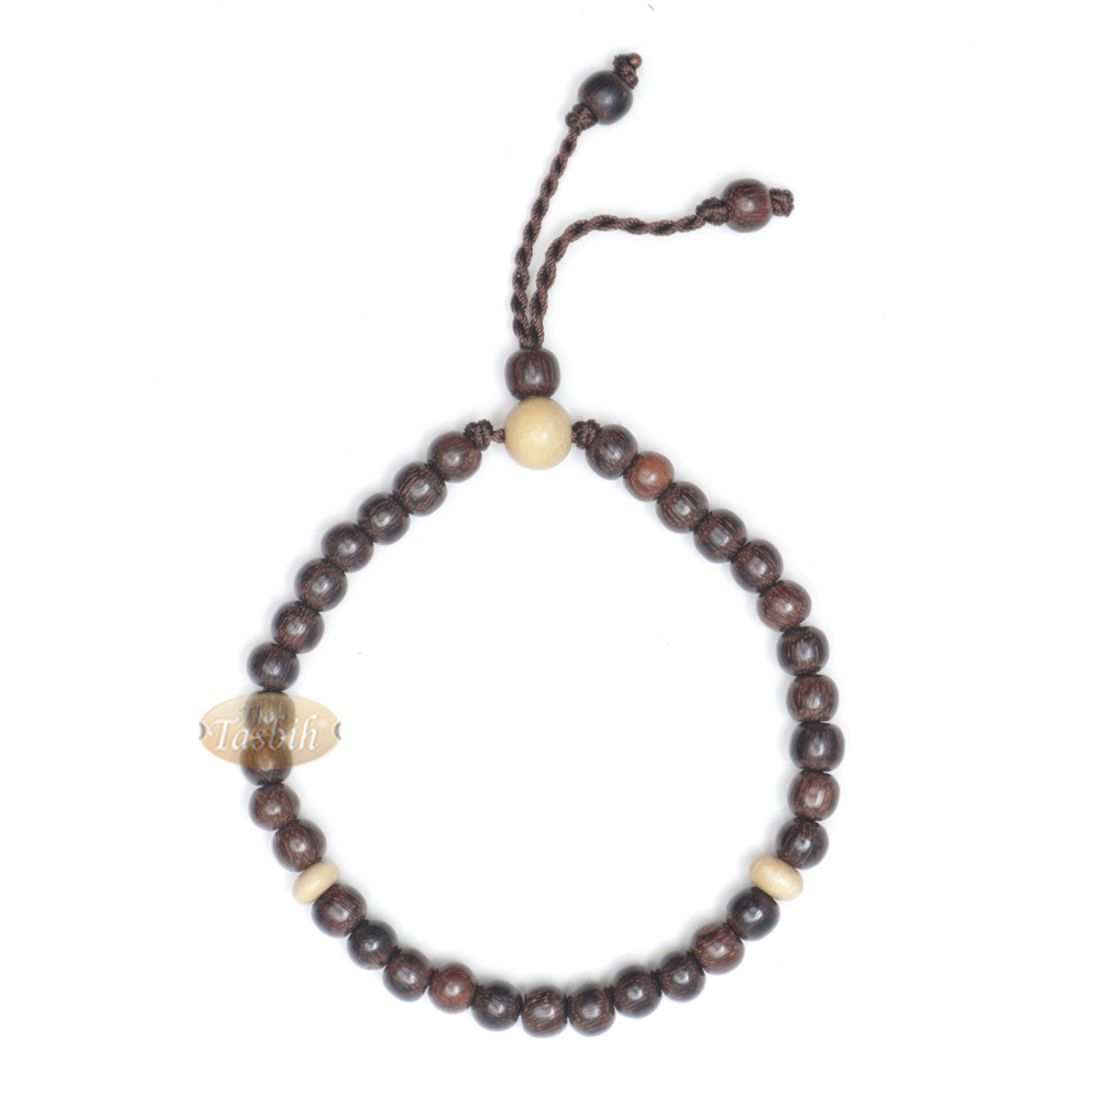 Small 6mm Tamarind Tasbih Bracelet with Citrus Wood 33ct Prayer Beads (7 to 8.5”)